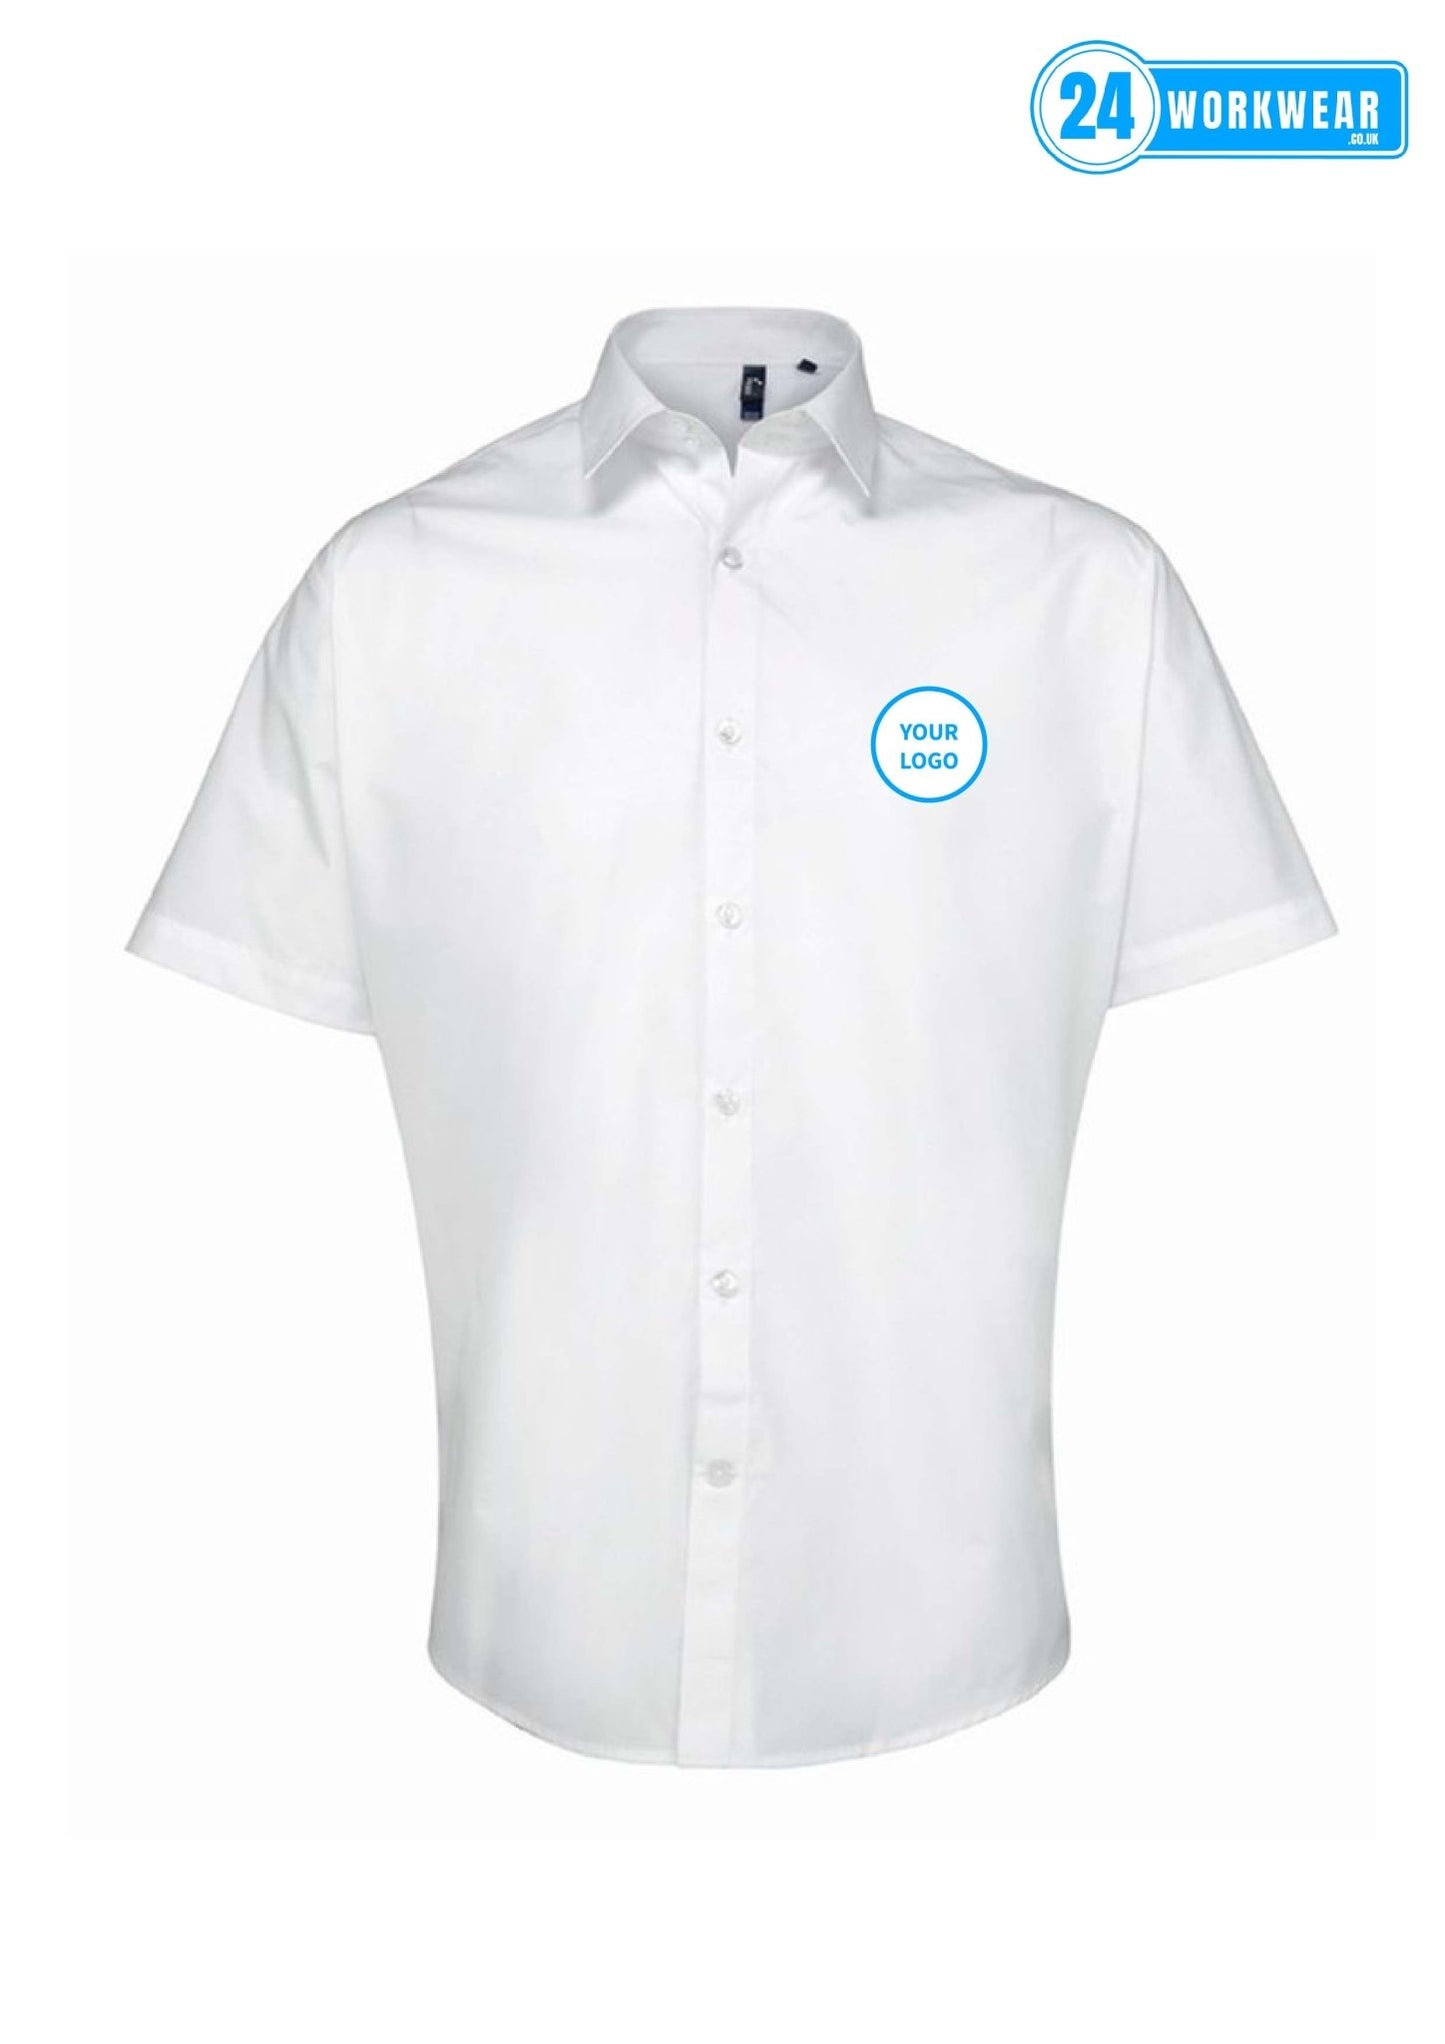 Premier Supreme Short Sleeve Poplin Shirt - 24 Workwear - Shirt